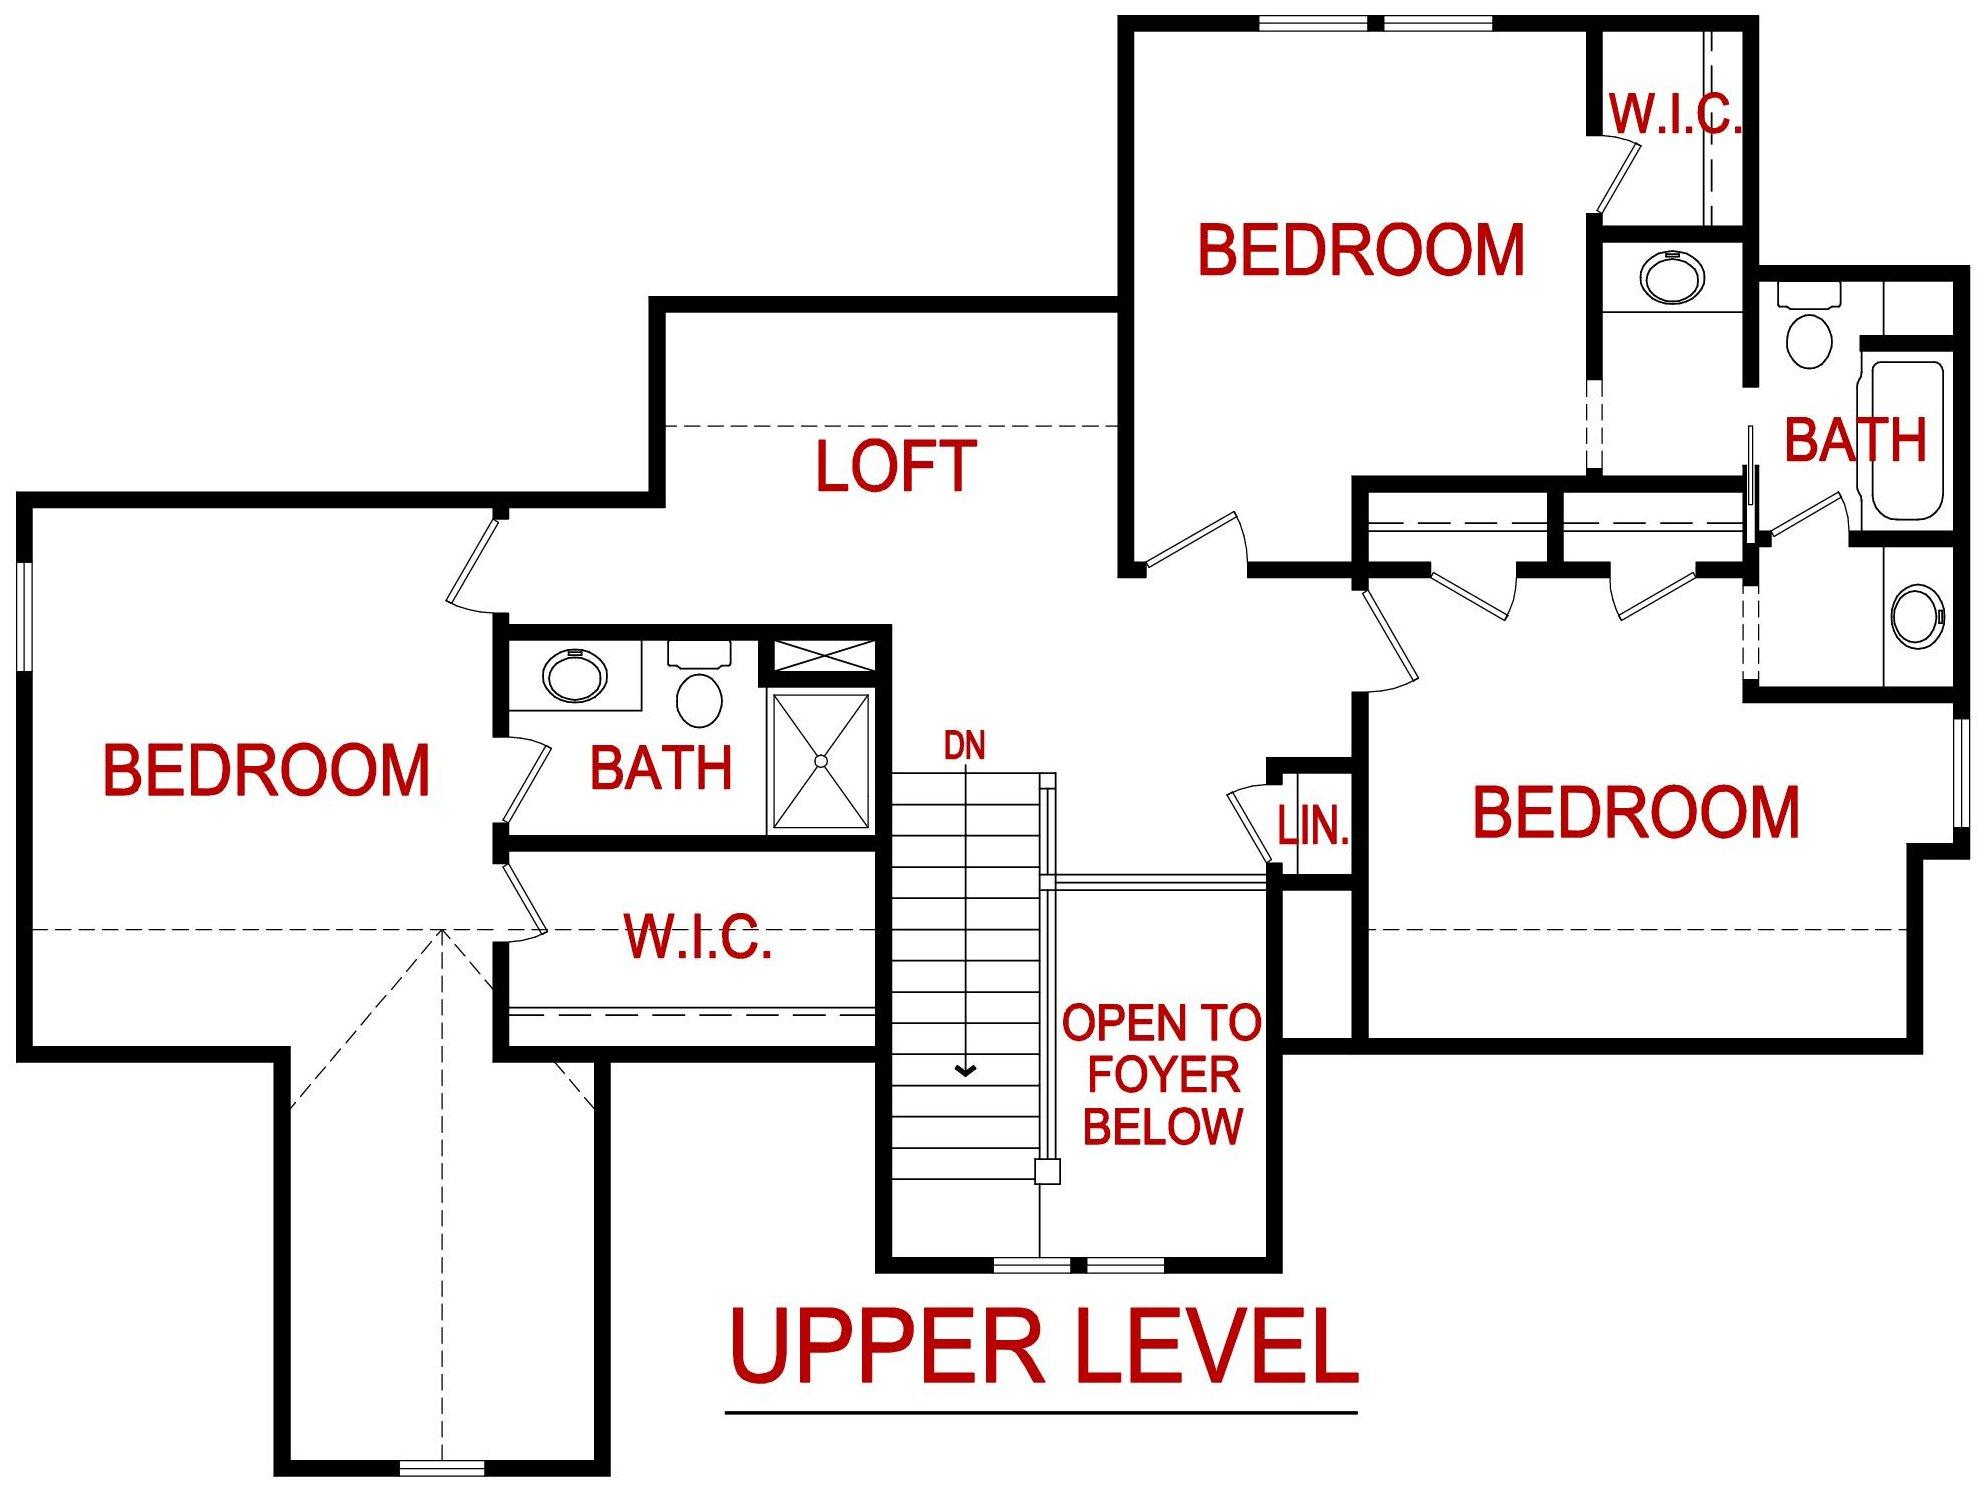 Upper level floor plan for the Persimmon model from Lambie Custom Homes